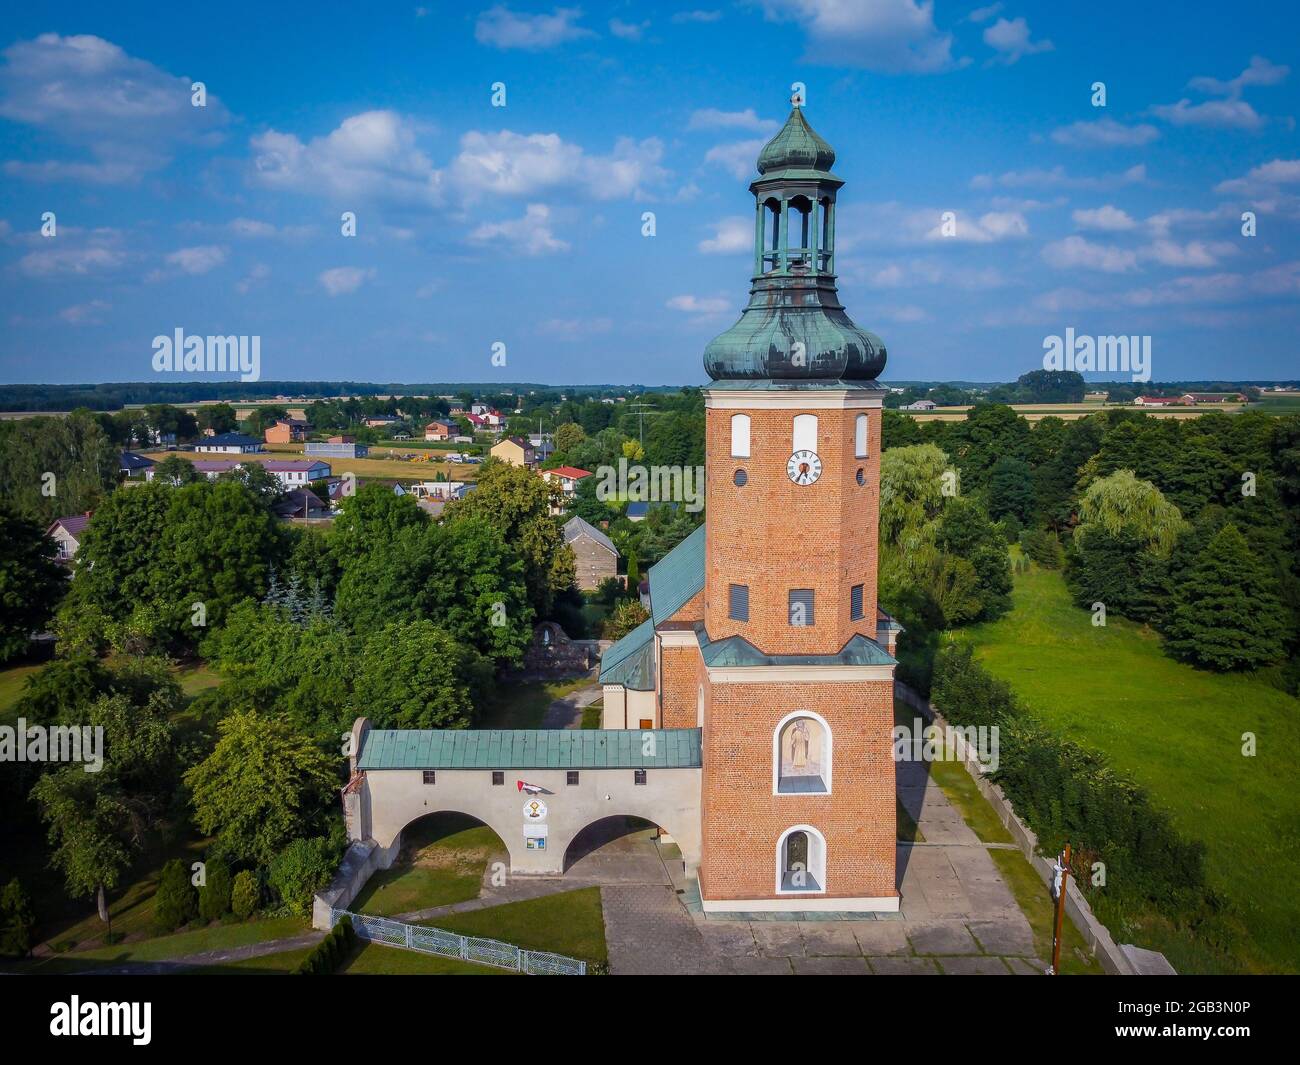 Catholic Church in Konopnica, Poland. Stock Photo